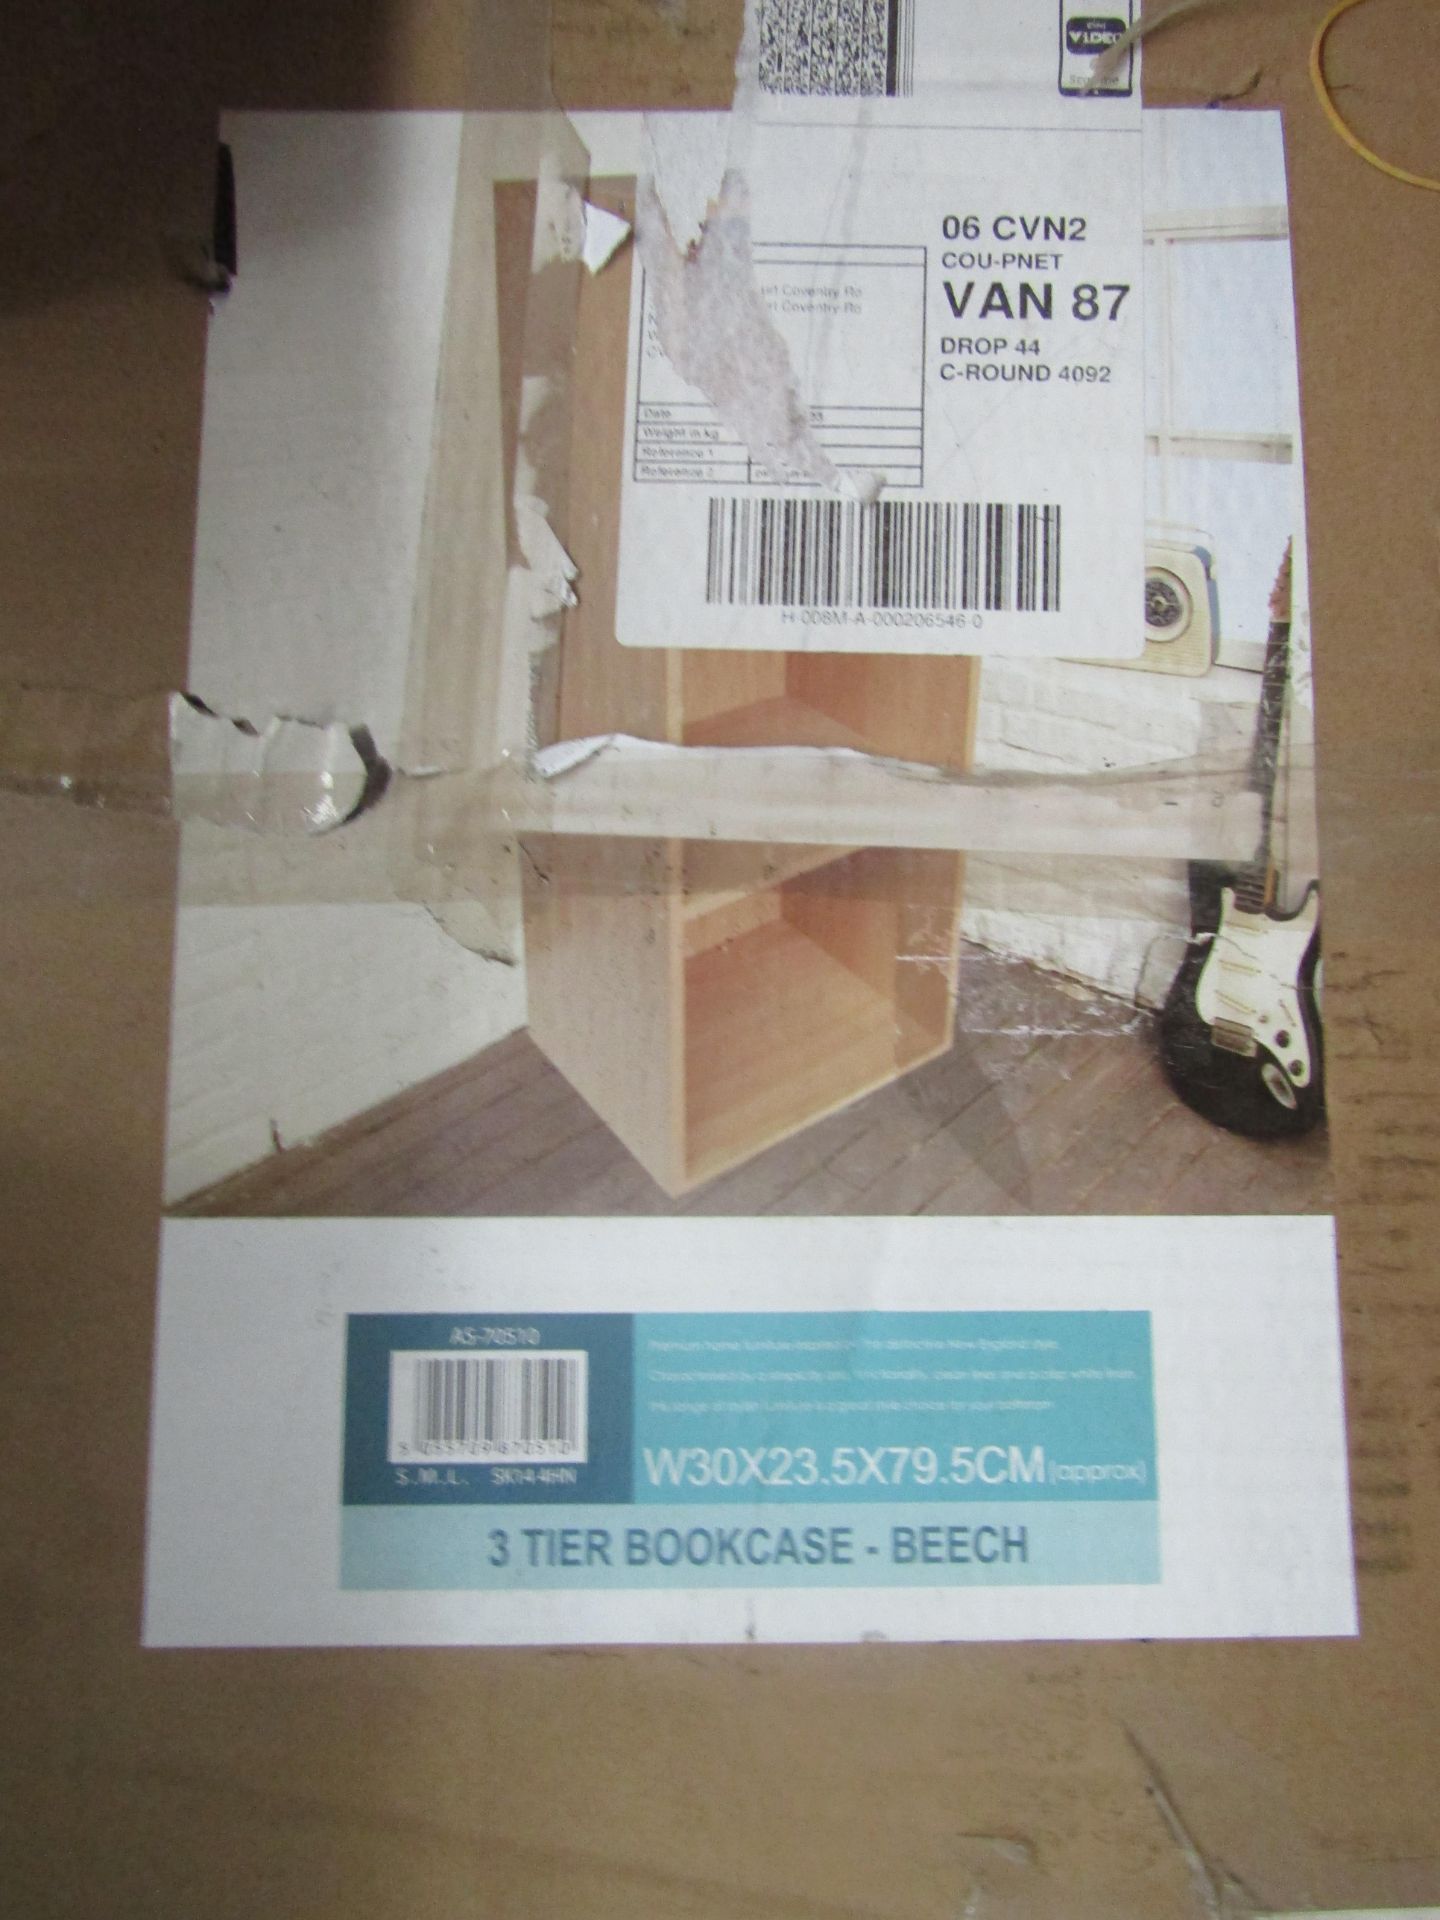 4X Asab - Beech 4-Tier Bookcase W30xD24xH108cm - Unchecked & Boxed. 2X Asab - Beech 3-Tier